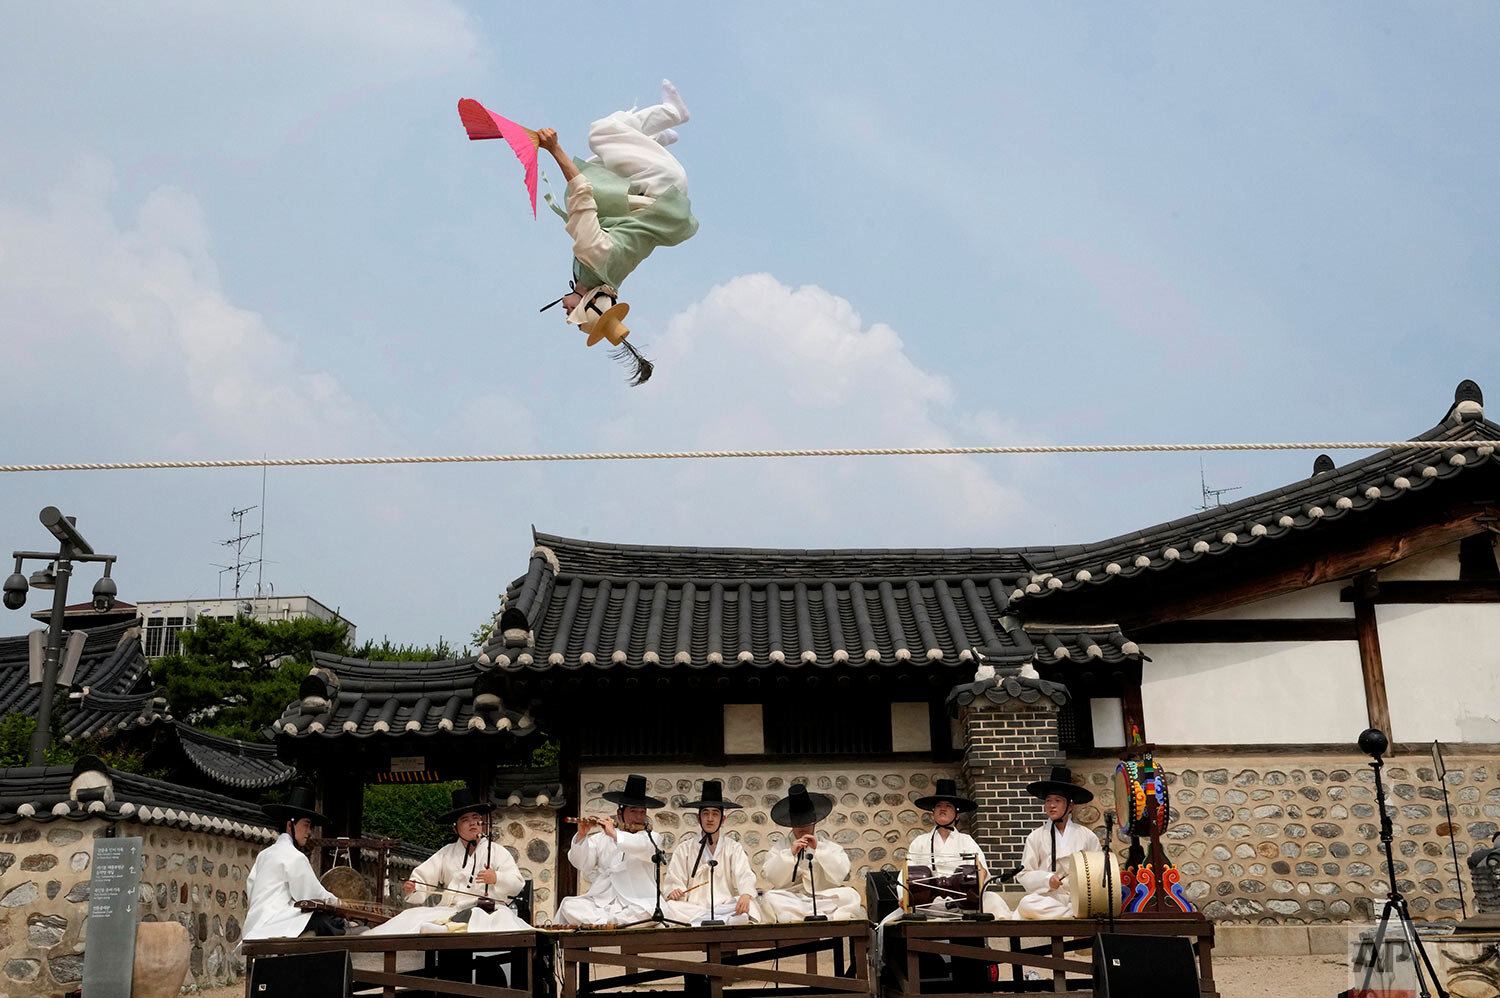  Nam Chang-dong, a South Korean tightrope walker, performs "Jultagi," or Tightrope Walking, at the Namsan Hanok village in Seoul, South Korea, Monday, June 14, 2021. (AP Photo/Ahn Young-joon) 